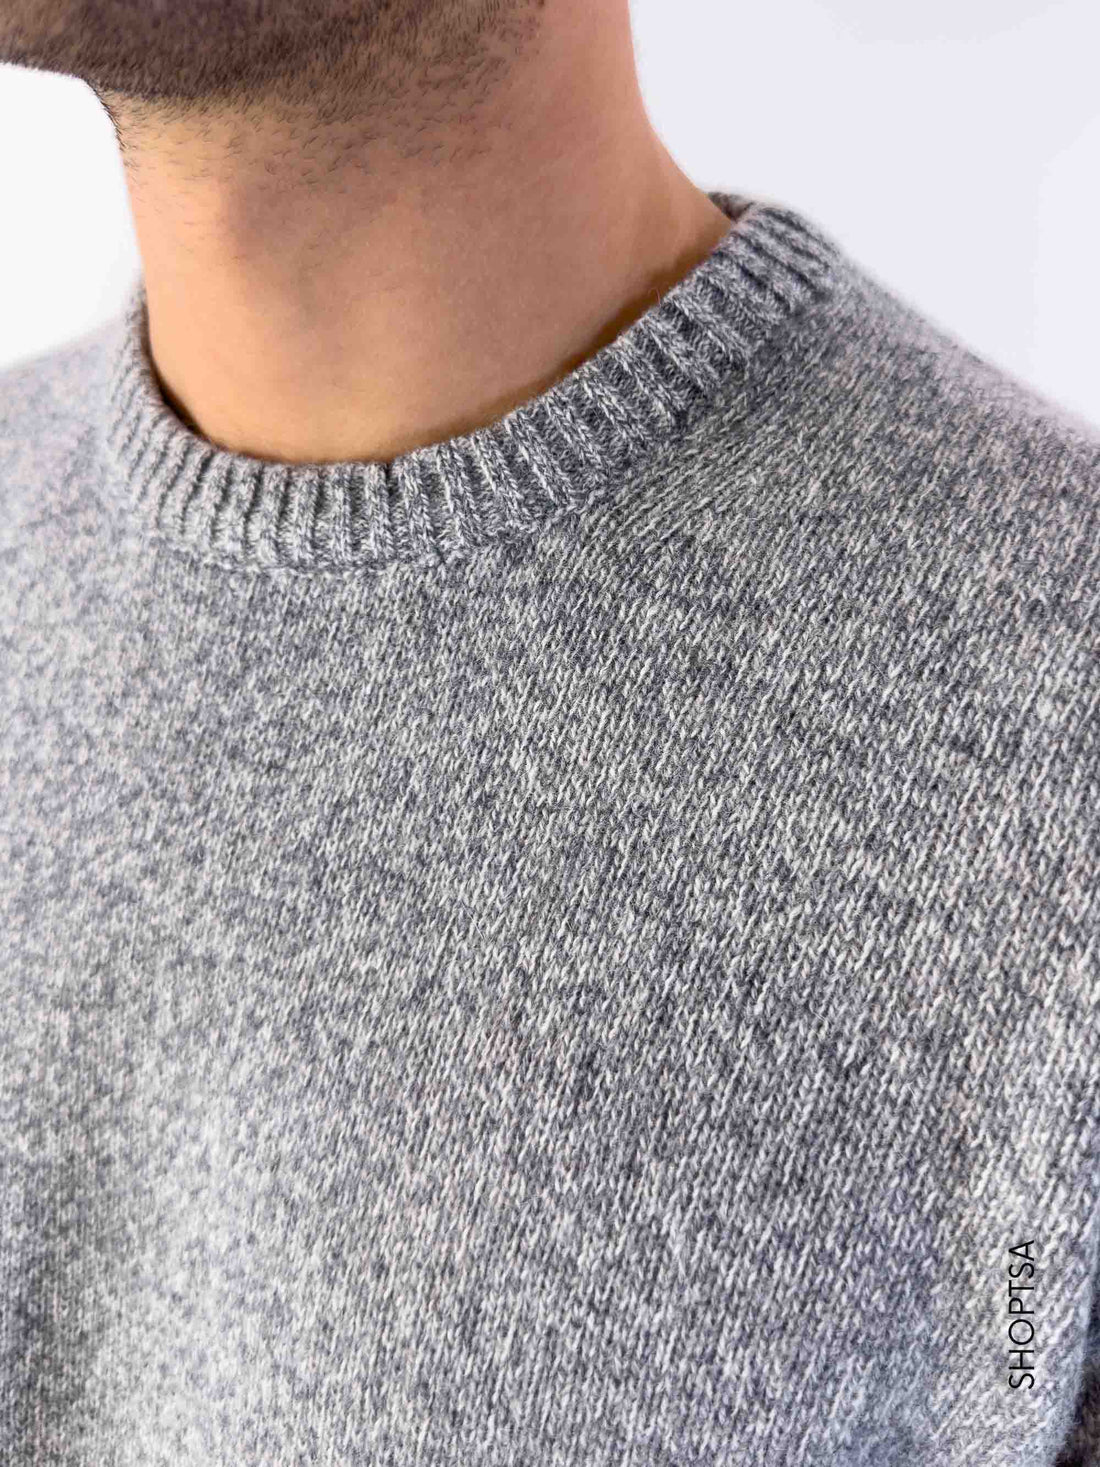 Crew-neck wool sweater - BLAME